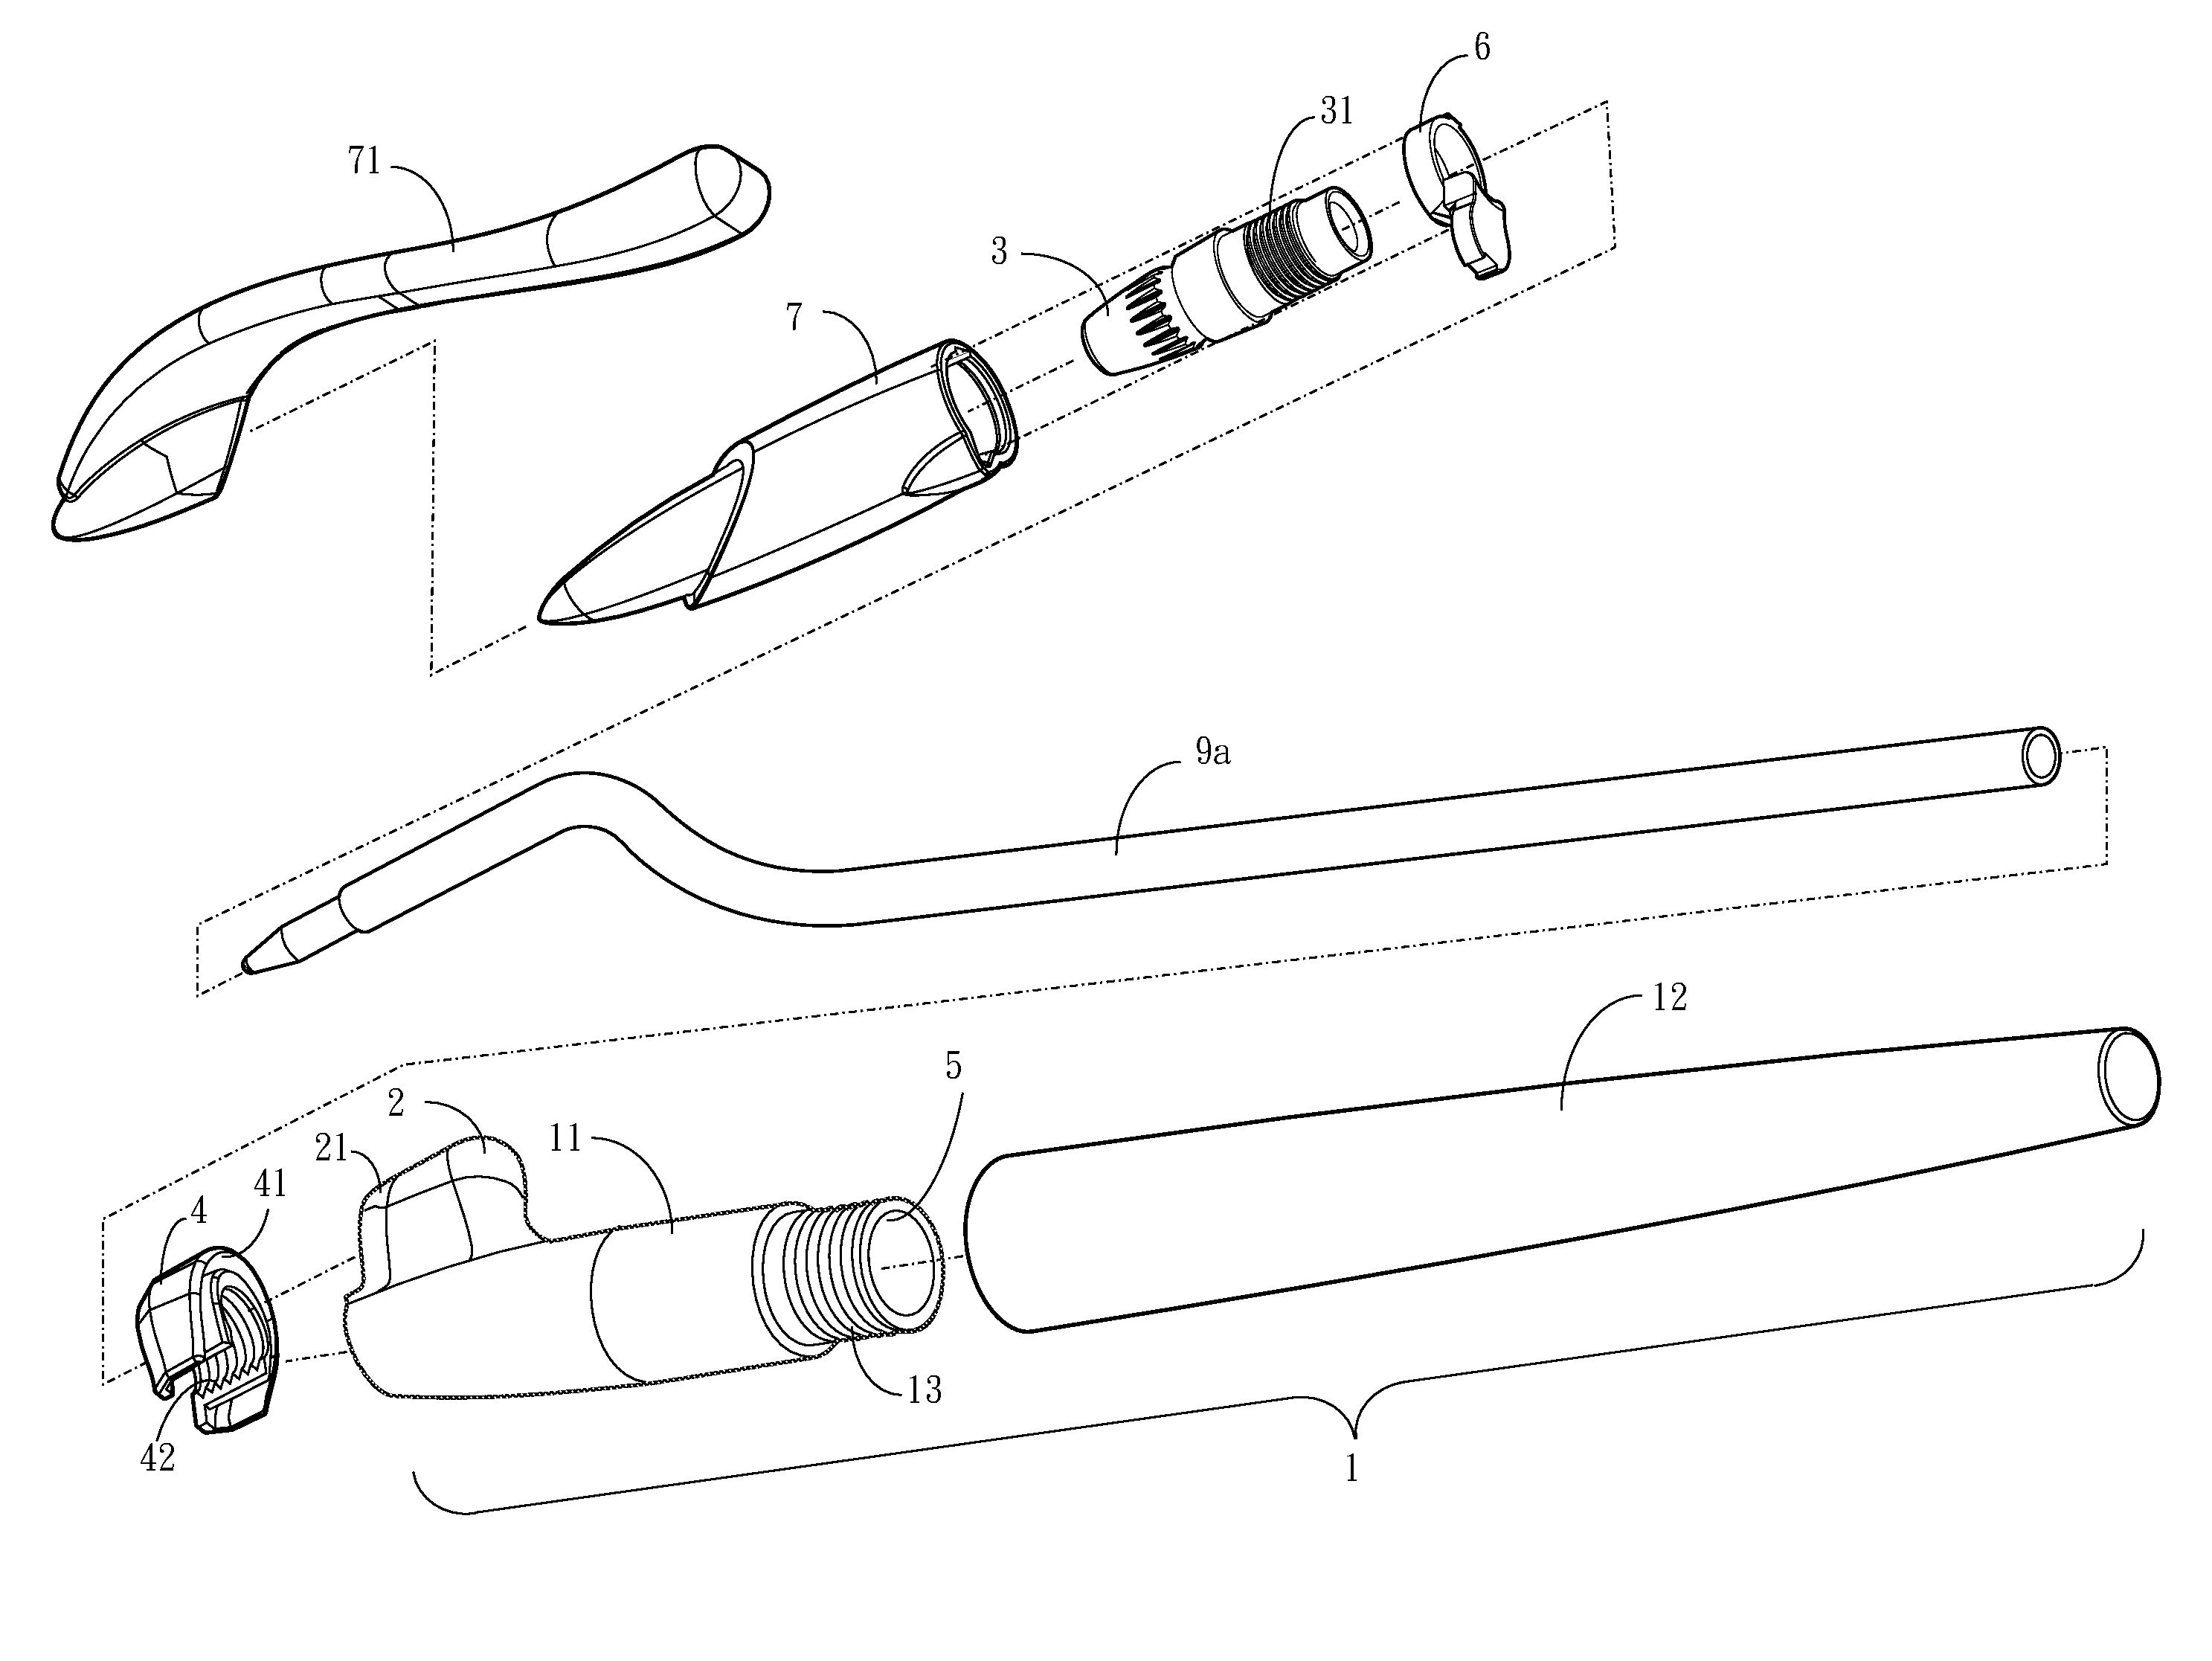 Offset pen structure for rapid assembling